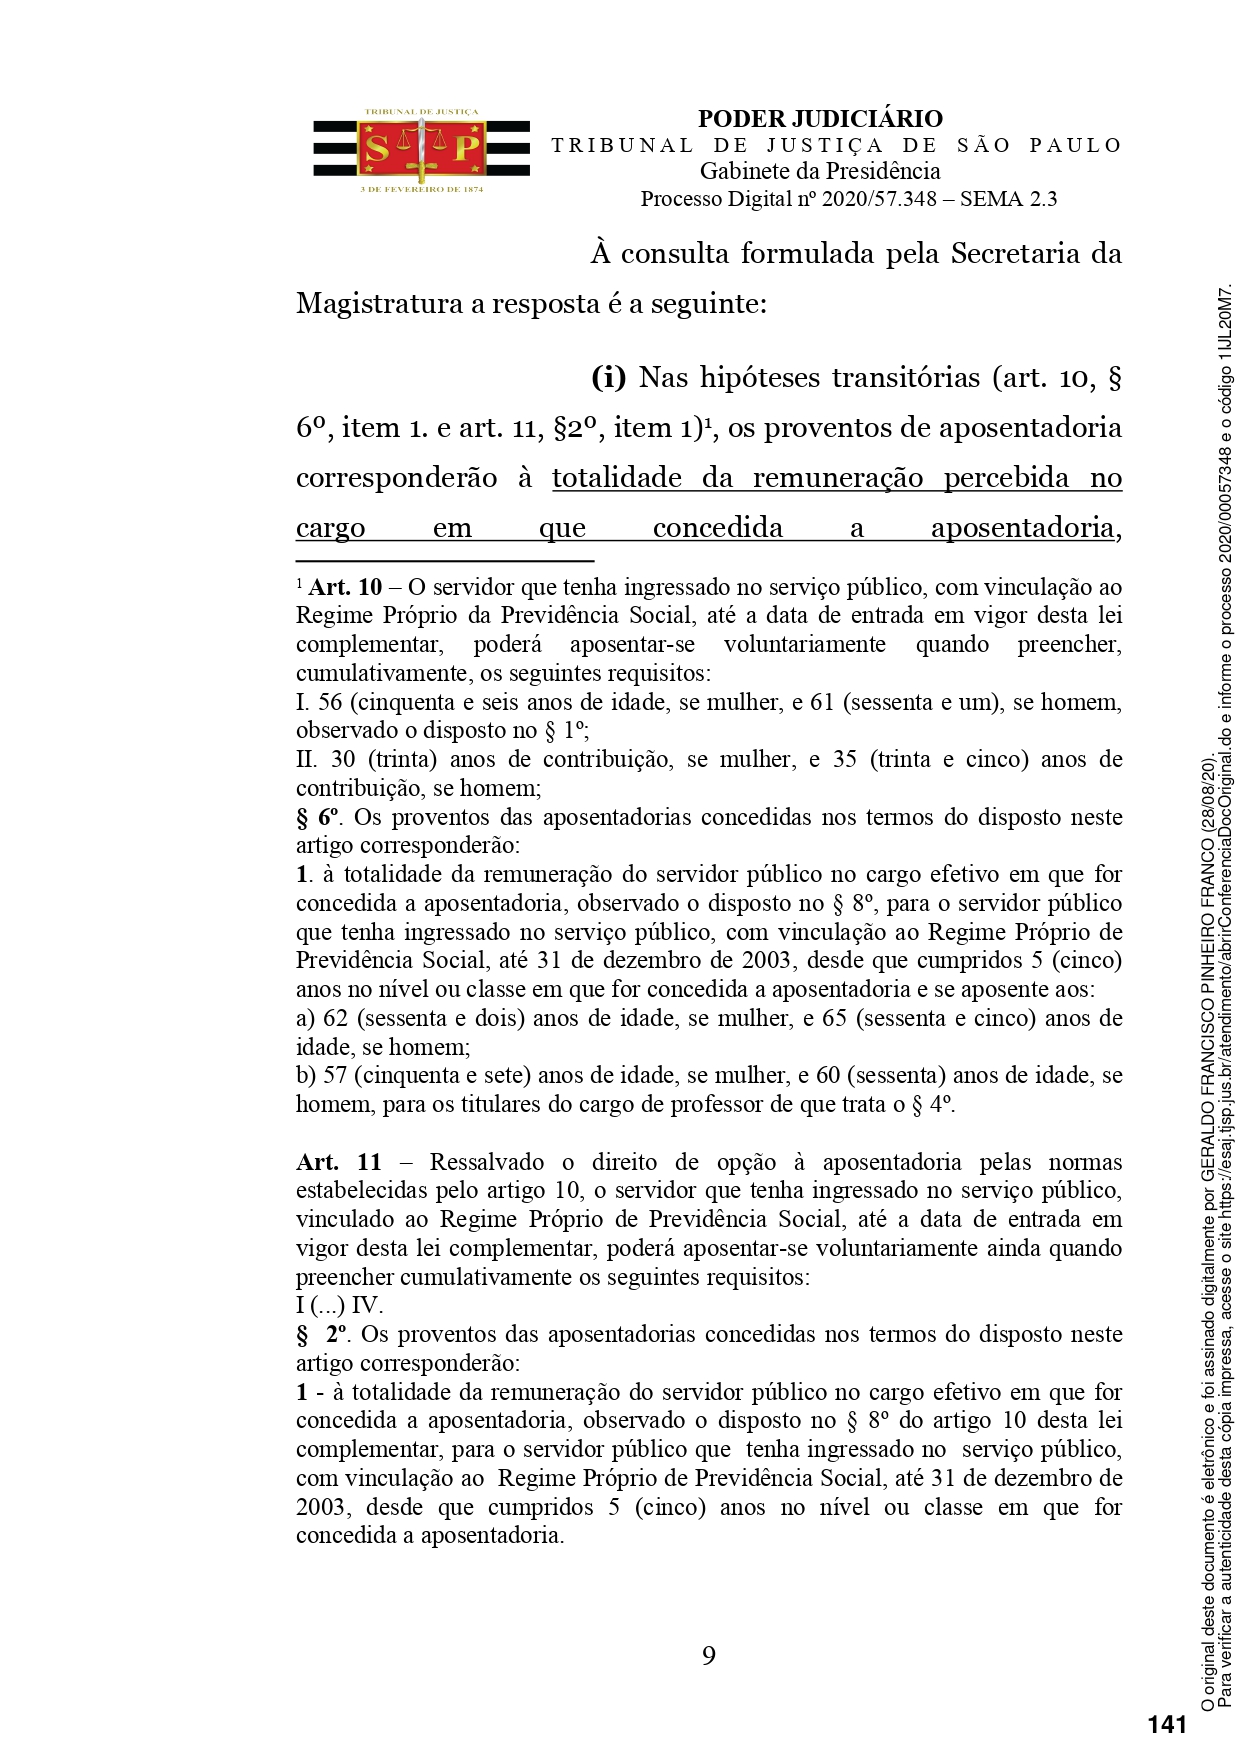 reforma-previdencia-tj-sp_page-0009.jpg